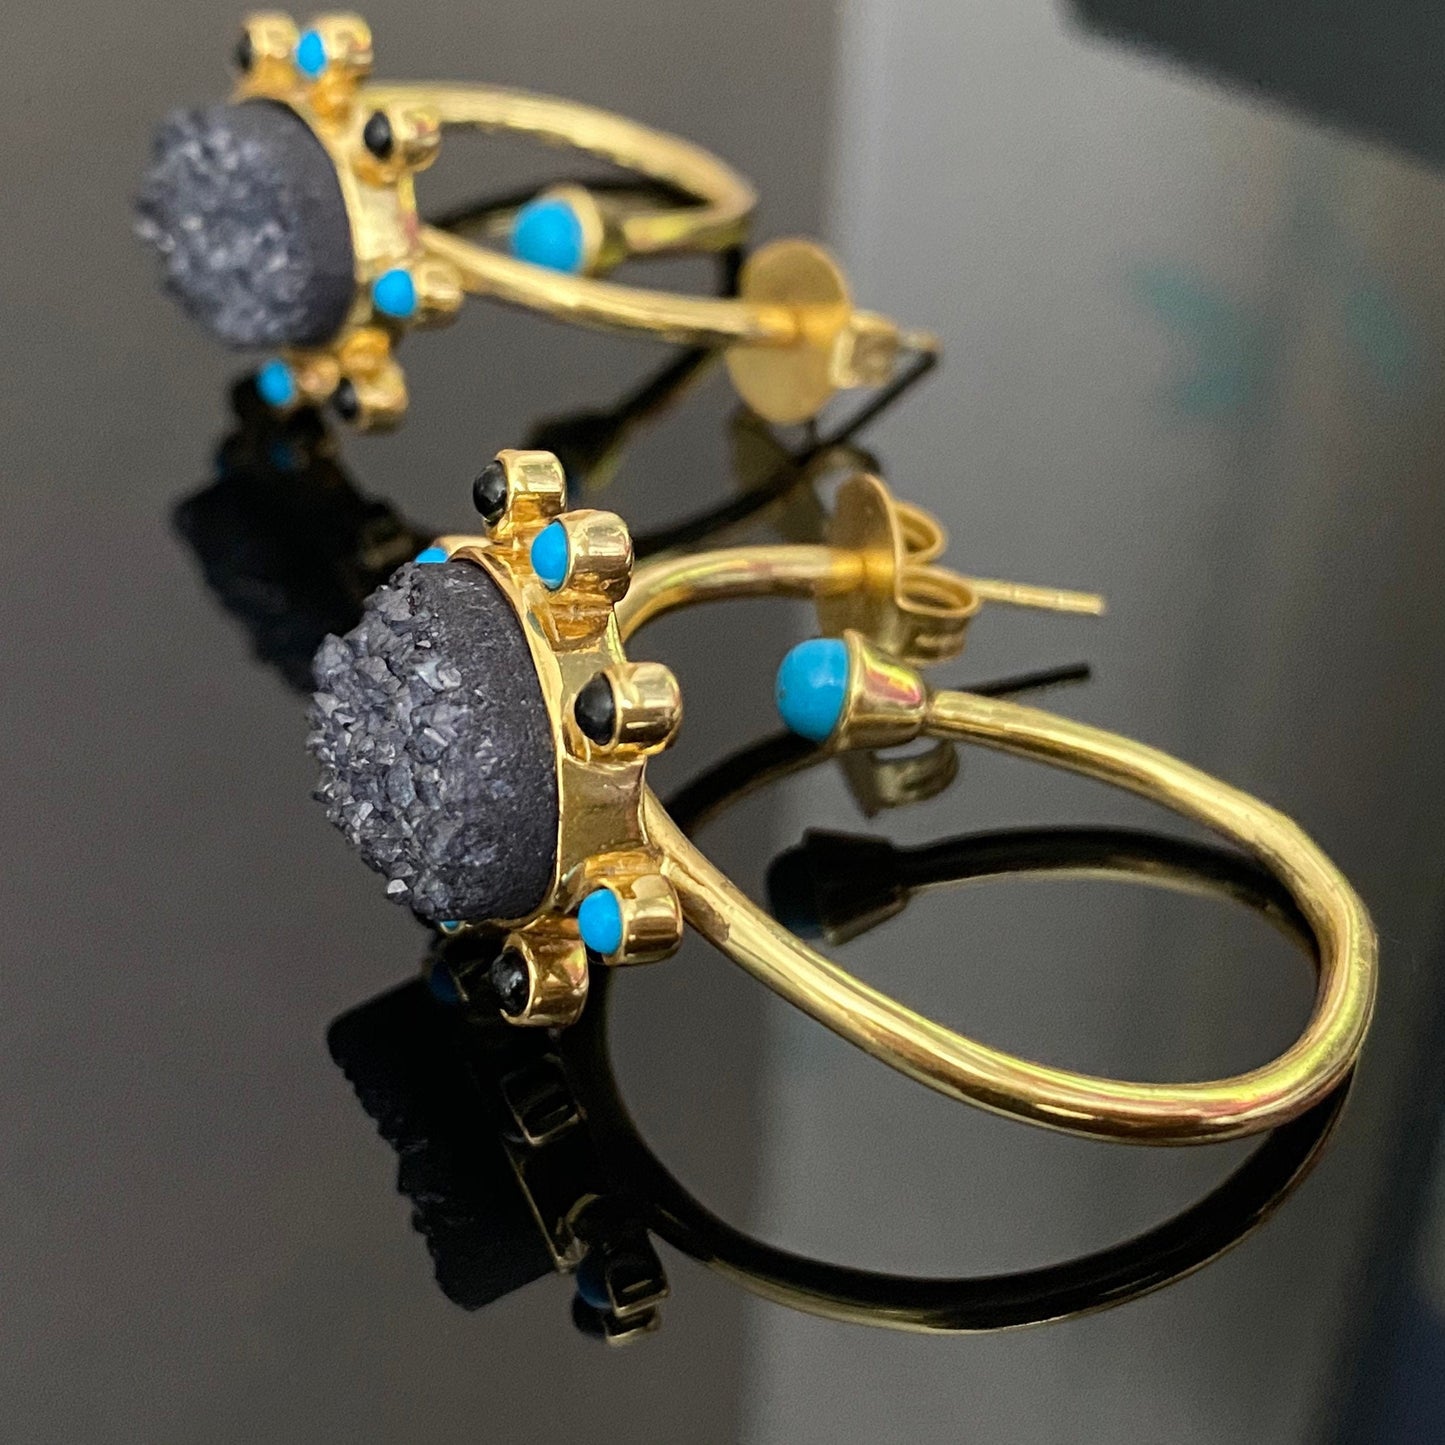 Black Onyx, Agate, Turquoise Gold Earrings, Druzy Earrings, Unique Gemstone Earrings, Birthday Gifts For Women